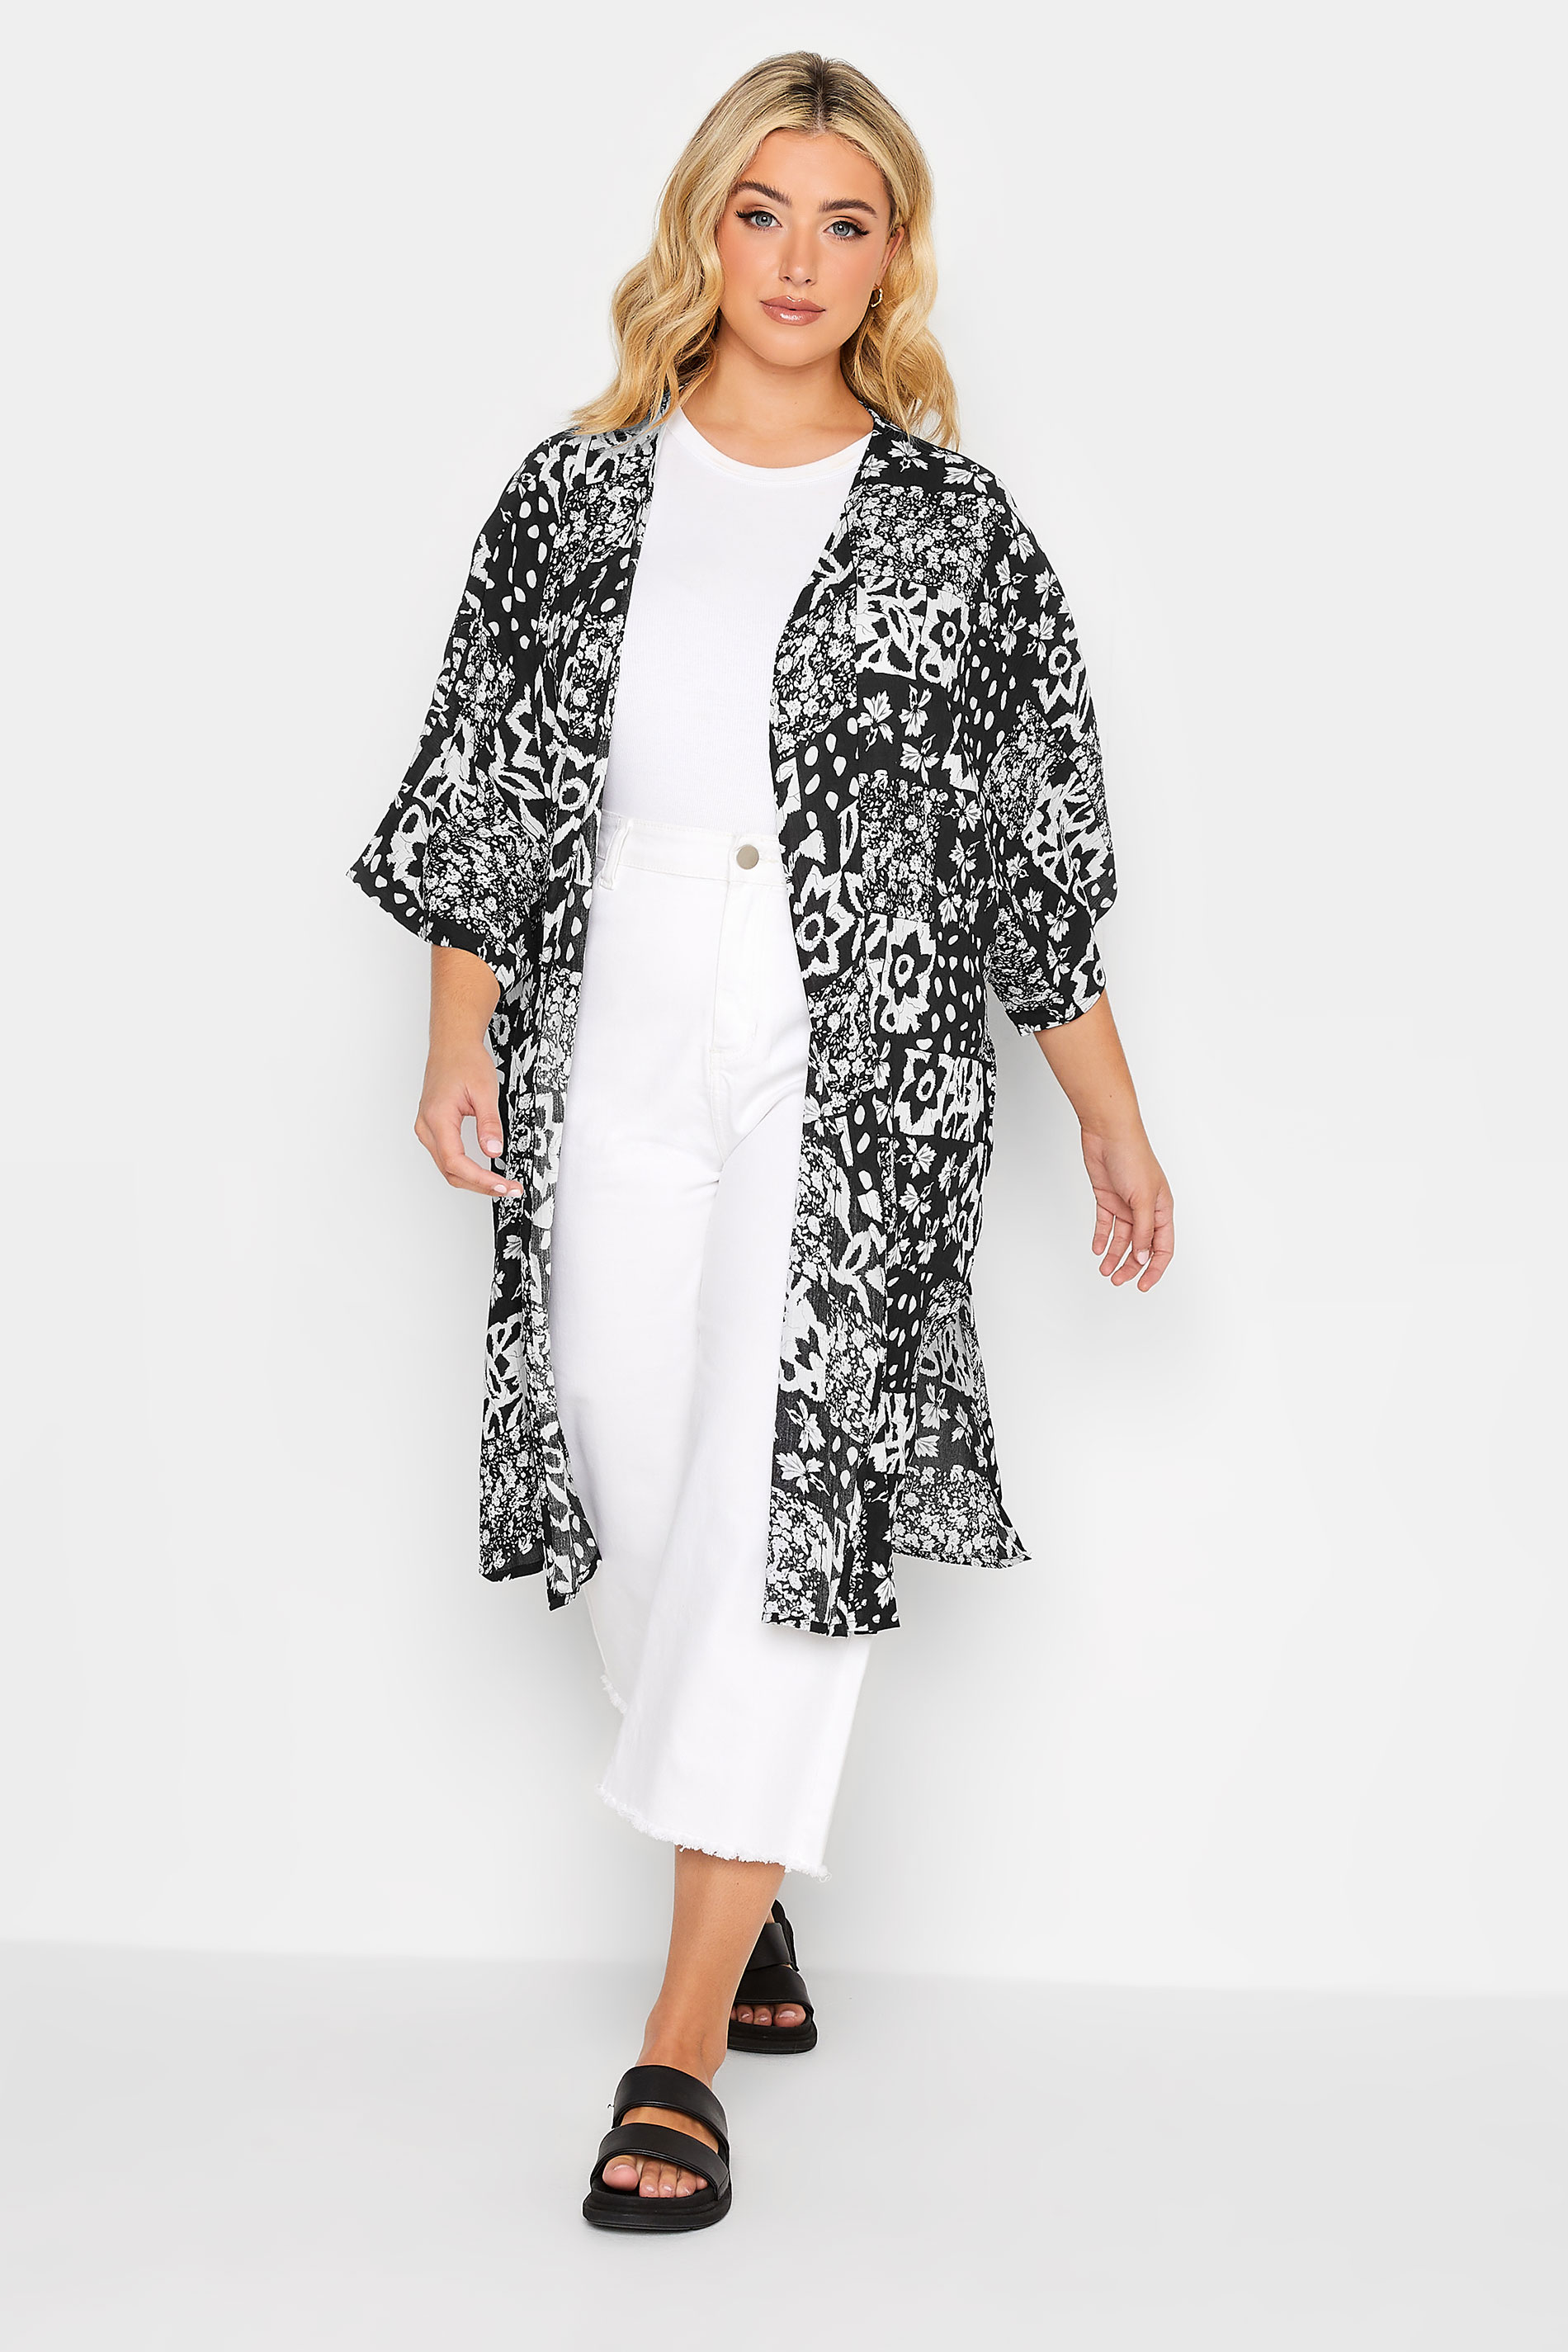 YOURS Curve Plus Size Black Tropical Print Longline Kimono | Yours Clothing  2